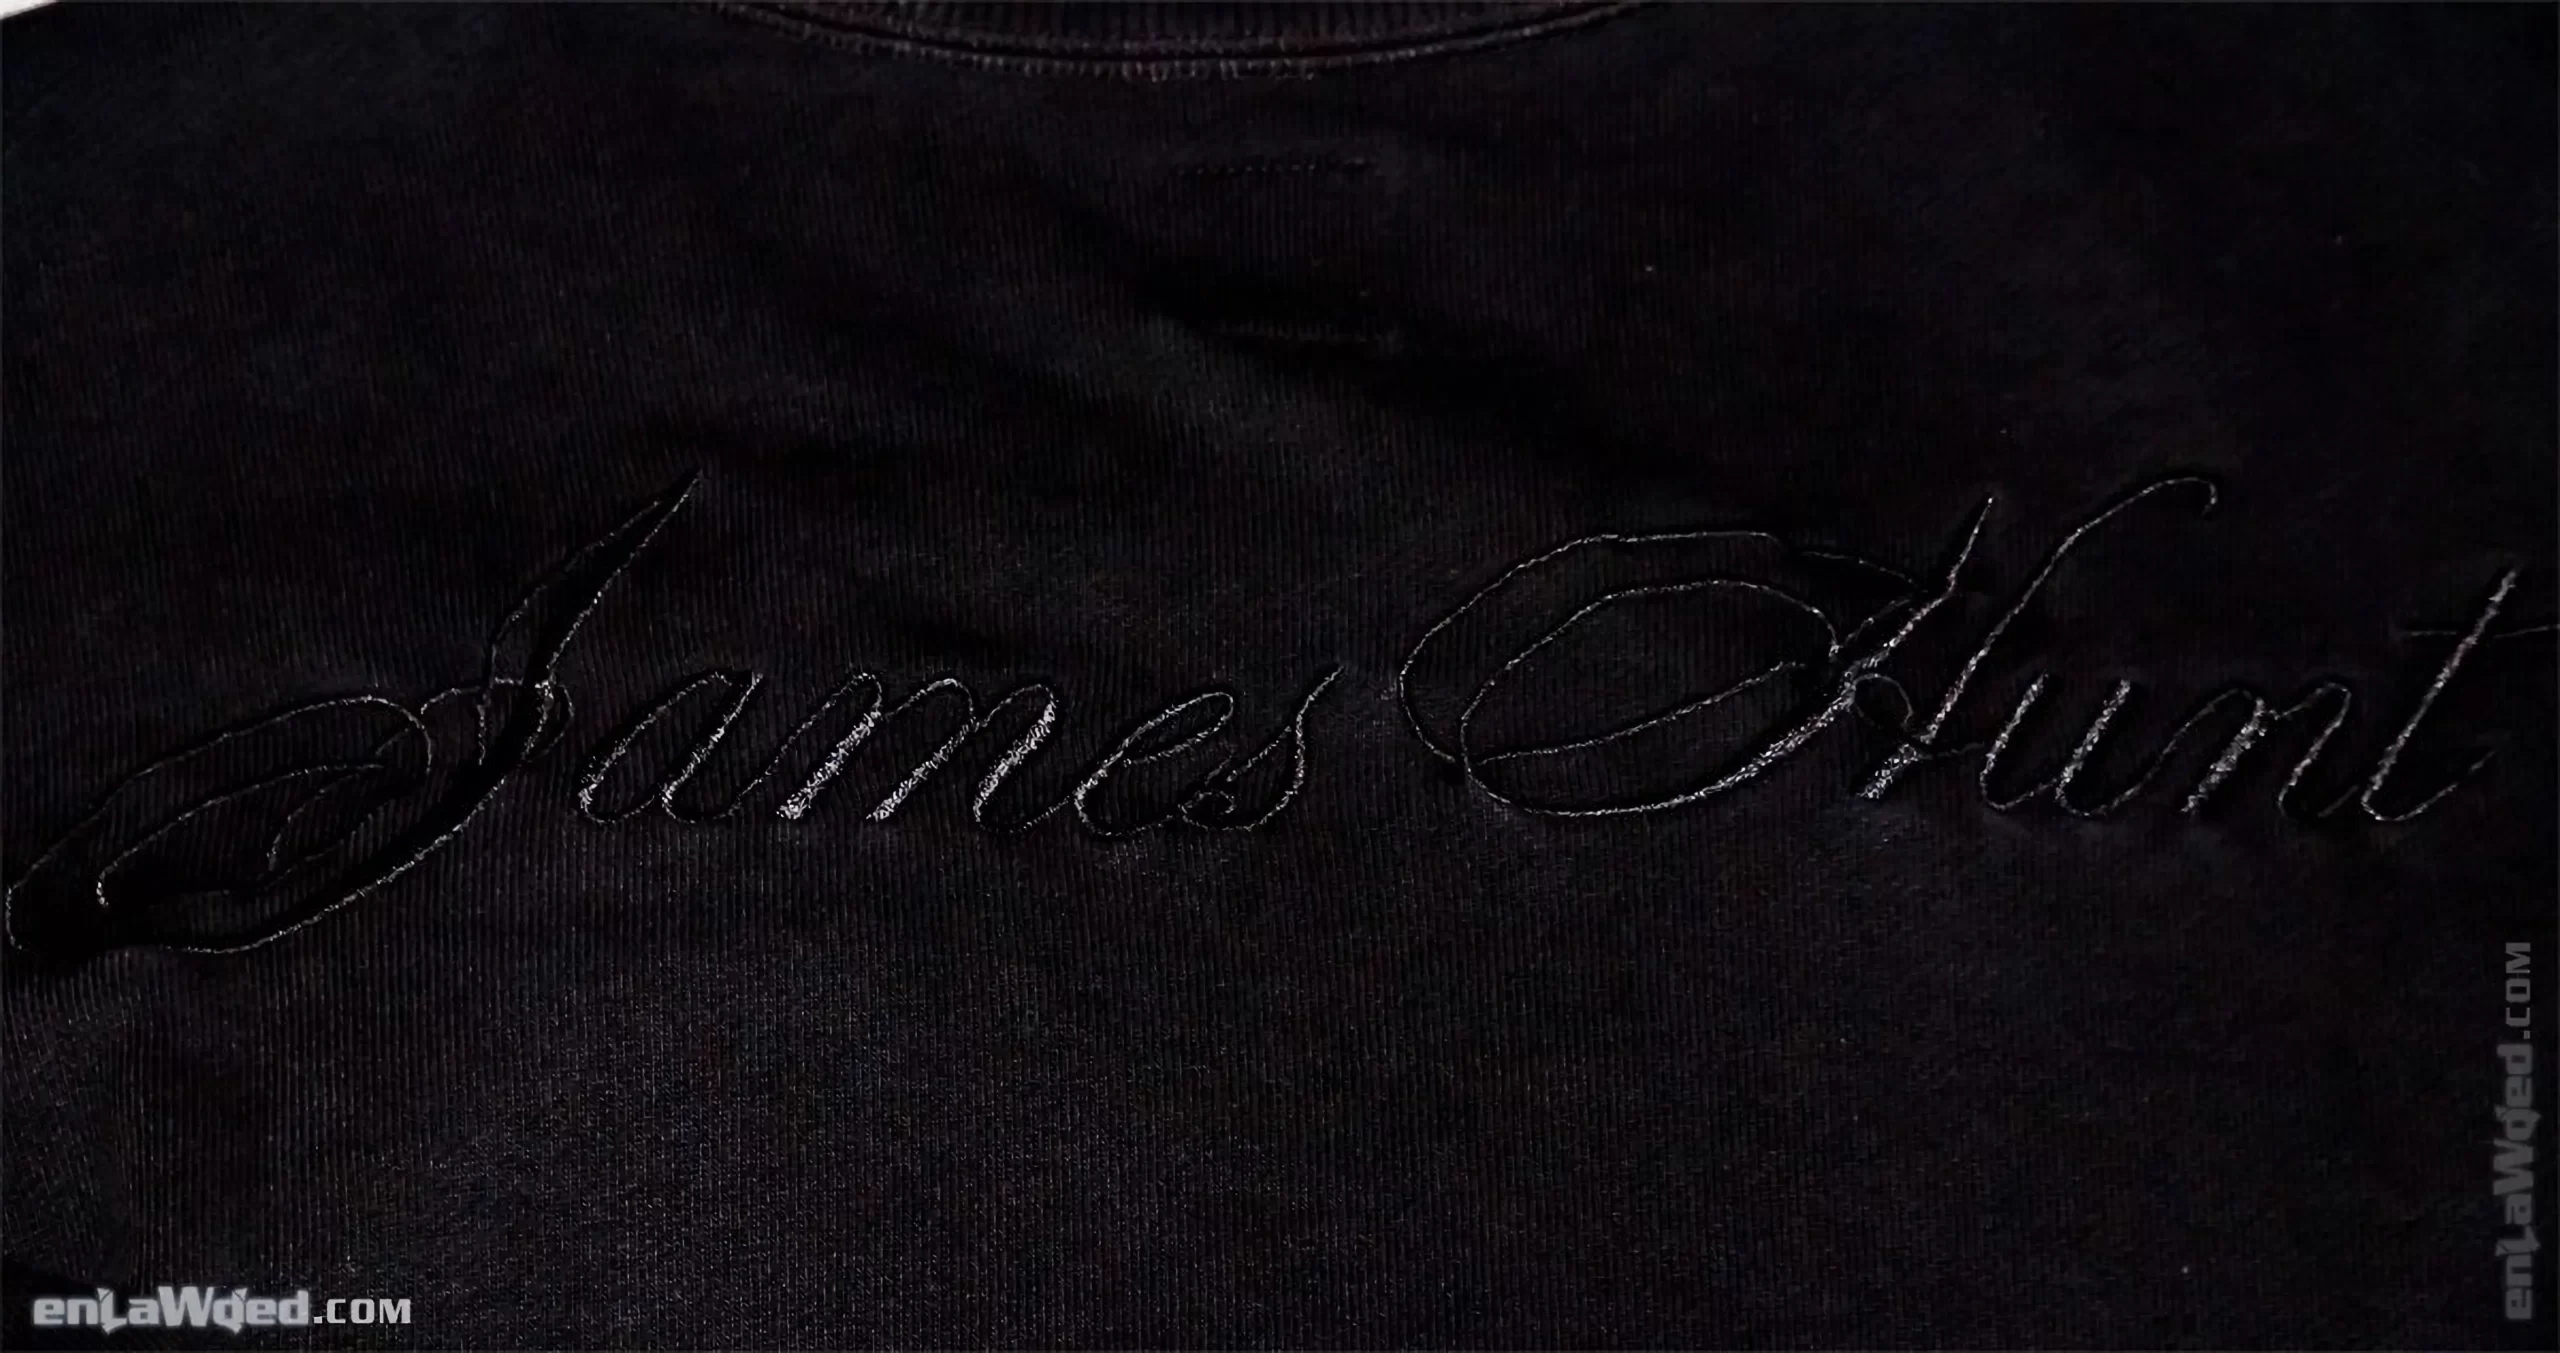 Men’s 2006 James Hunt Player’s Sweatshirt by Adidas: Spunky (EnLawded.com file #lmchk90314ip2y125019kg9st)